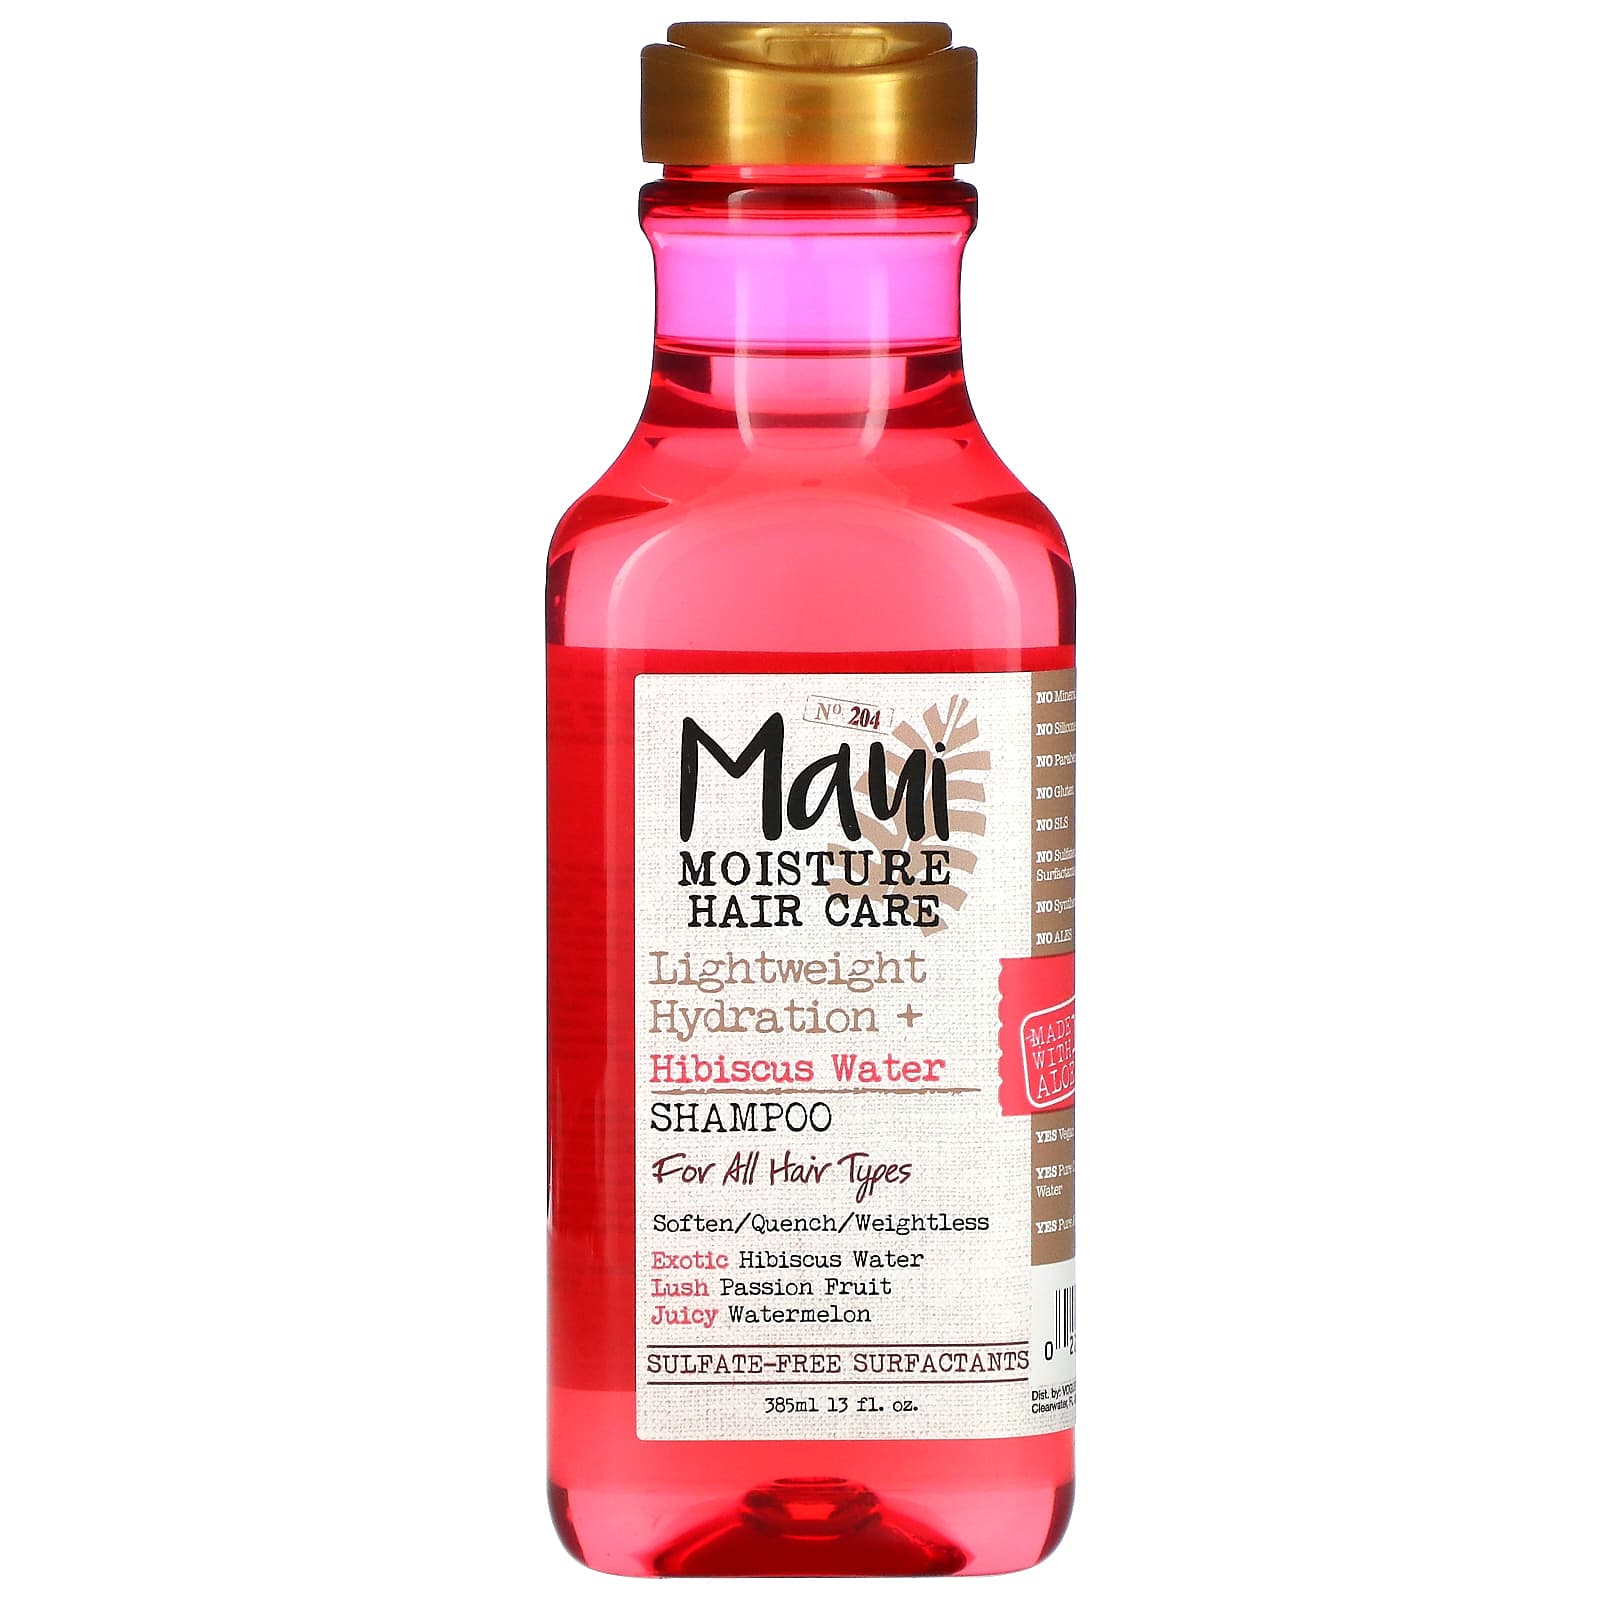 Maui Moisture, Hair Care, Lightweight Hydration + Hibiscus Water Shampoo,  For All Hair Types, 13 fl oz (385 ml)